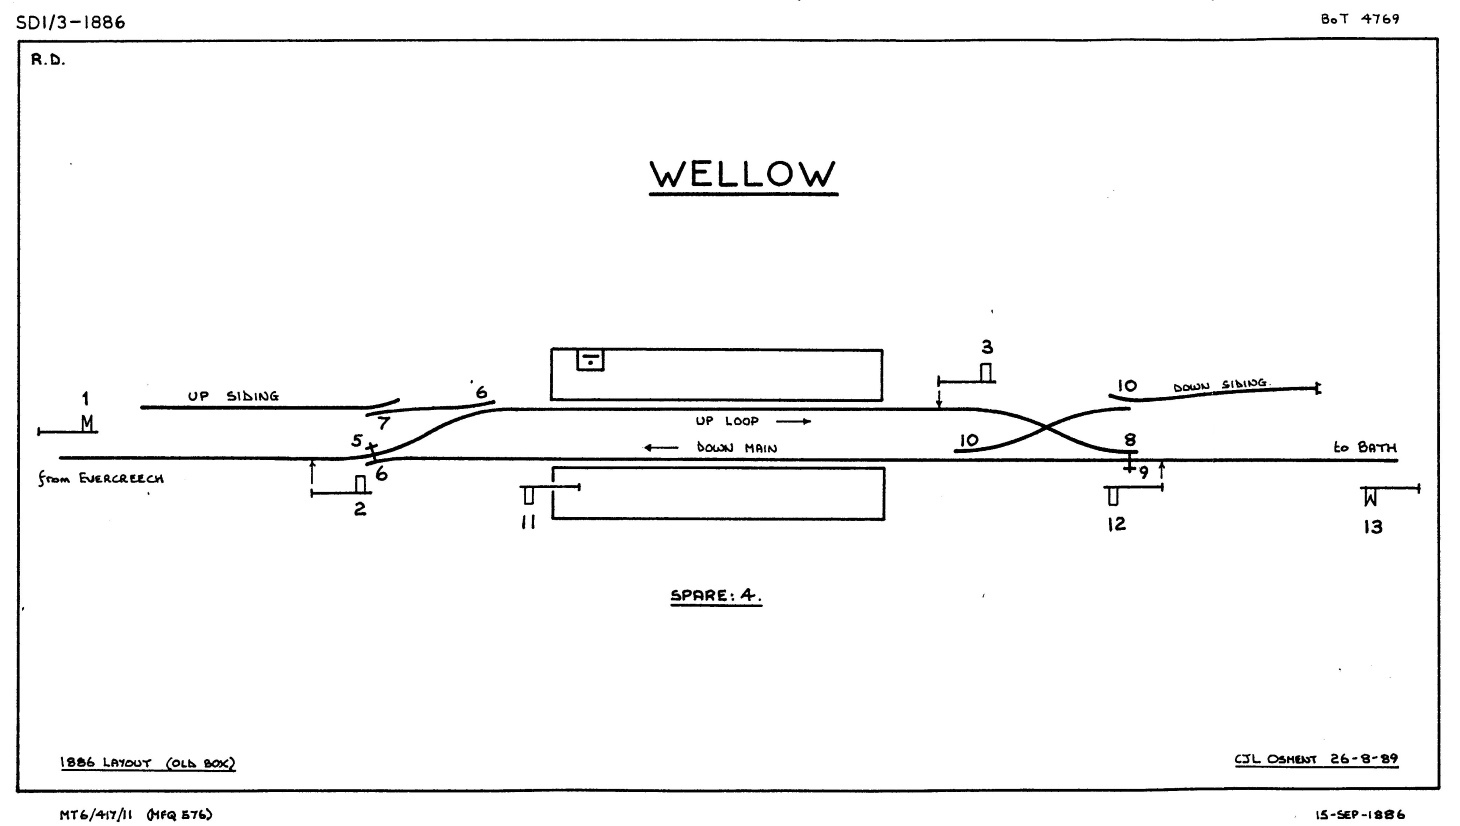 Wellow signal-box diagram 1886